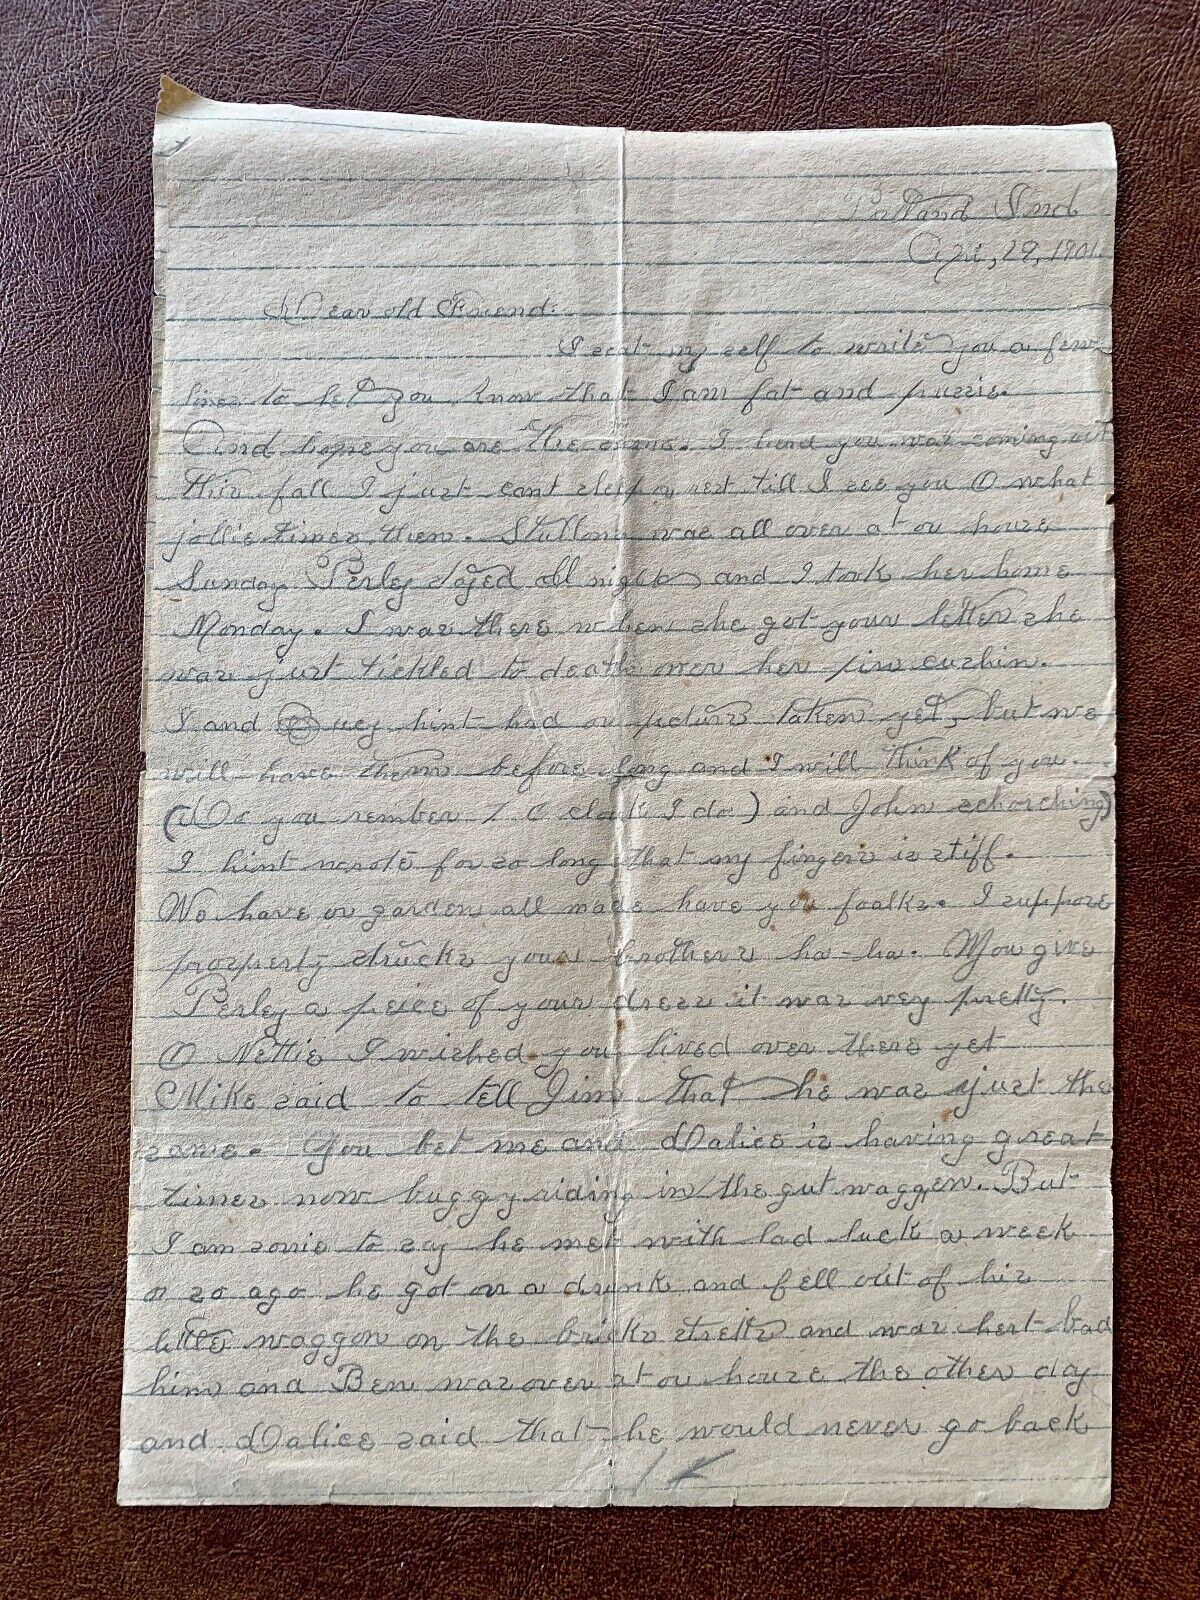 1901 Correspondence Letter Poem Picture Gossip Complaints Pencil on Writing Ppr